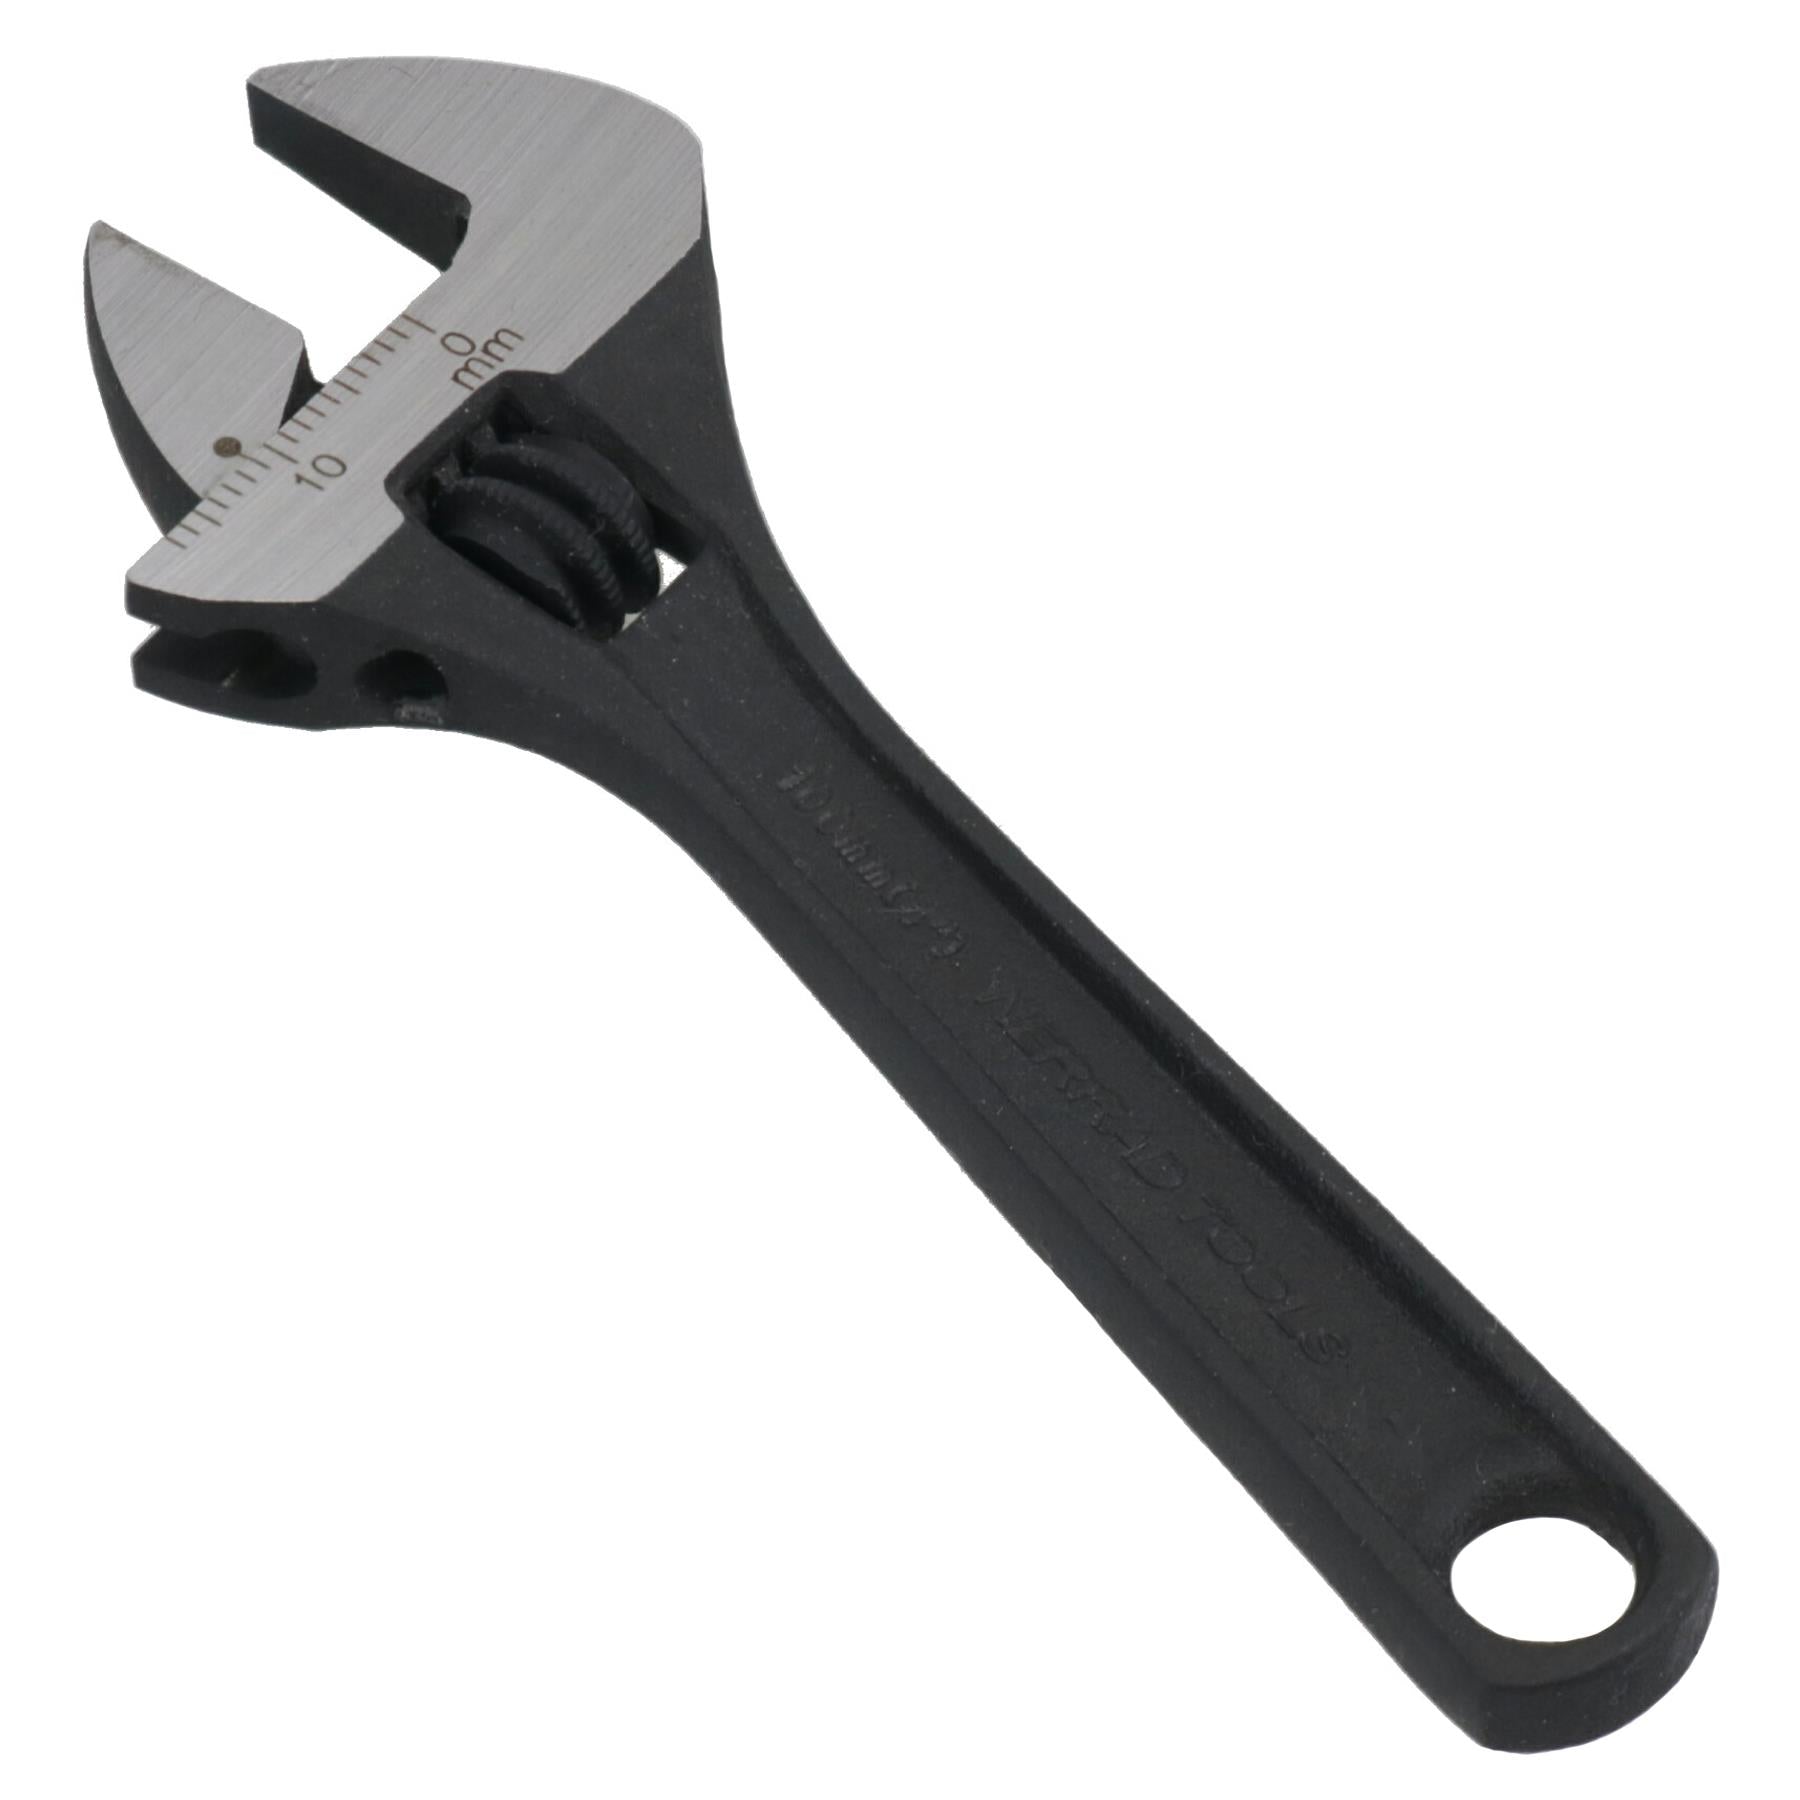 Mini Adjustable Wrench Spanner Slim Jaw 0 – 18mm Plumbers Plumbing